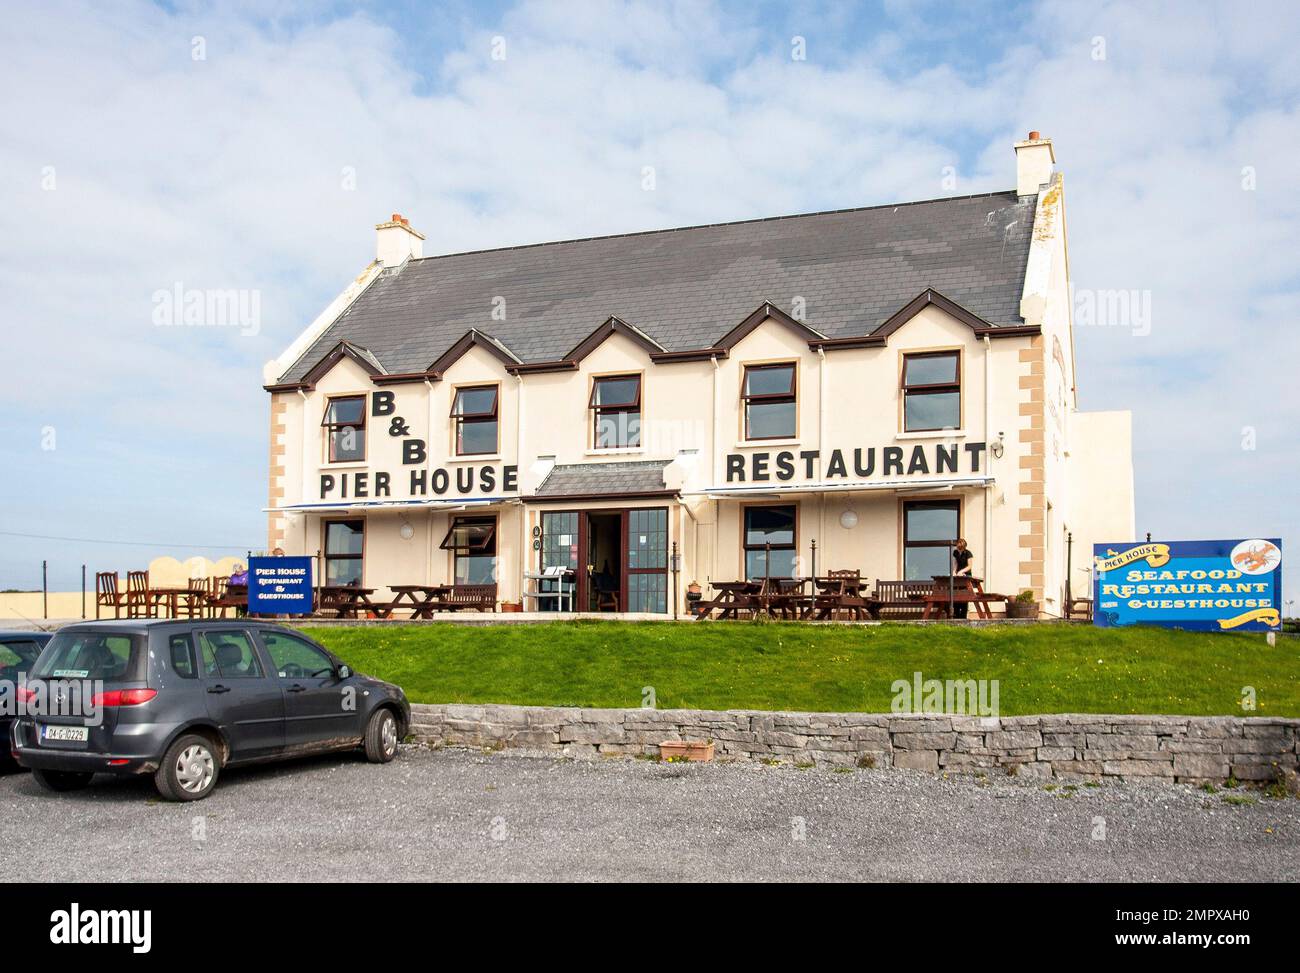 Island B&B guesthouse accommodation restaurant in Ireland. Pier House B&B Inishmore Aran Islands County Galway Ireland. Stock Photo